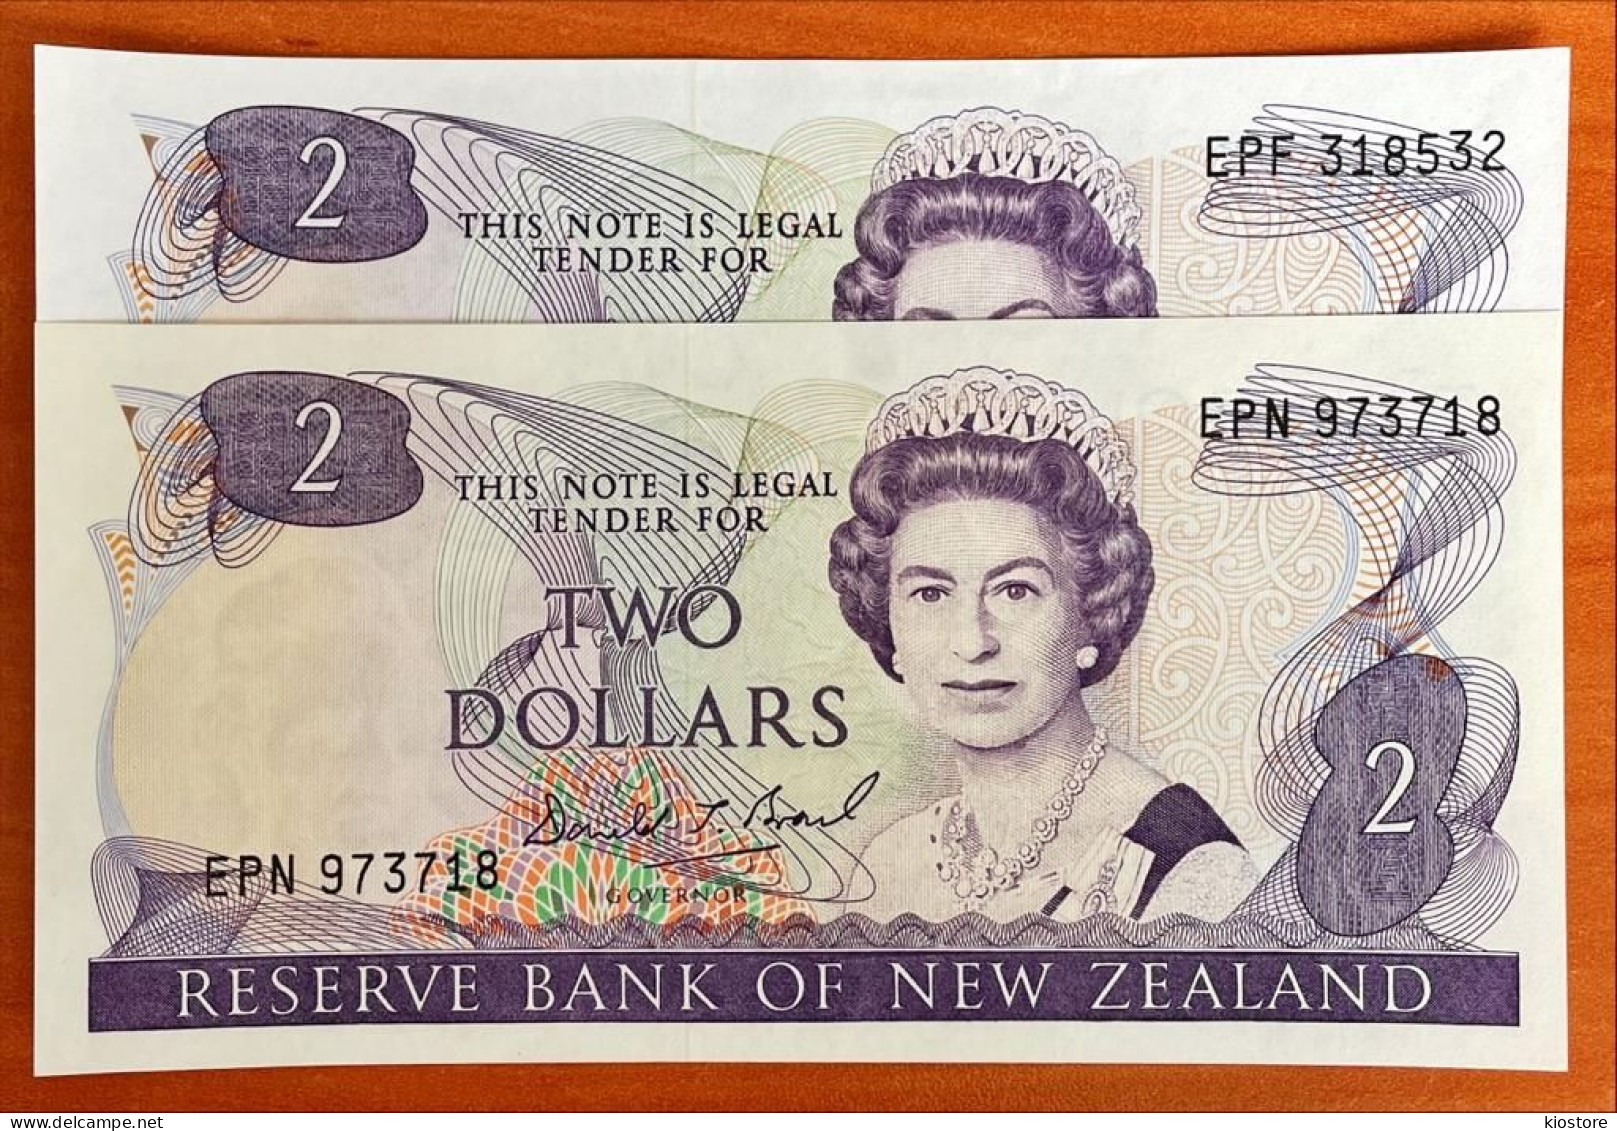 New Zealand 2 Dollars 1989 P170c Yellow & White Paper UNC - Neuseeland